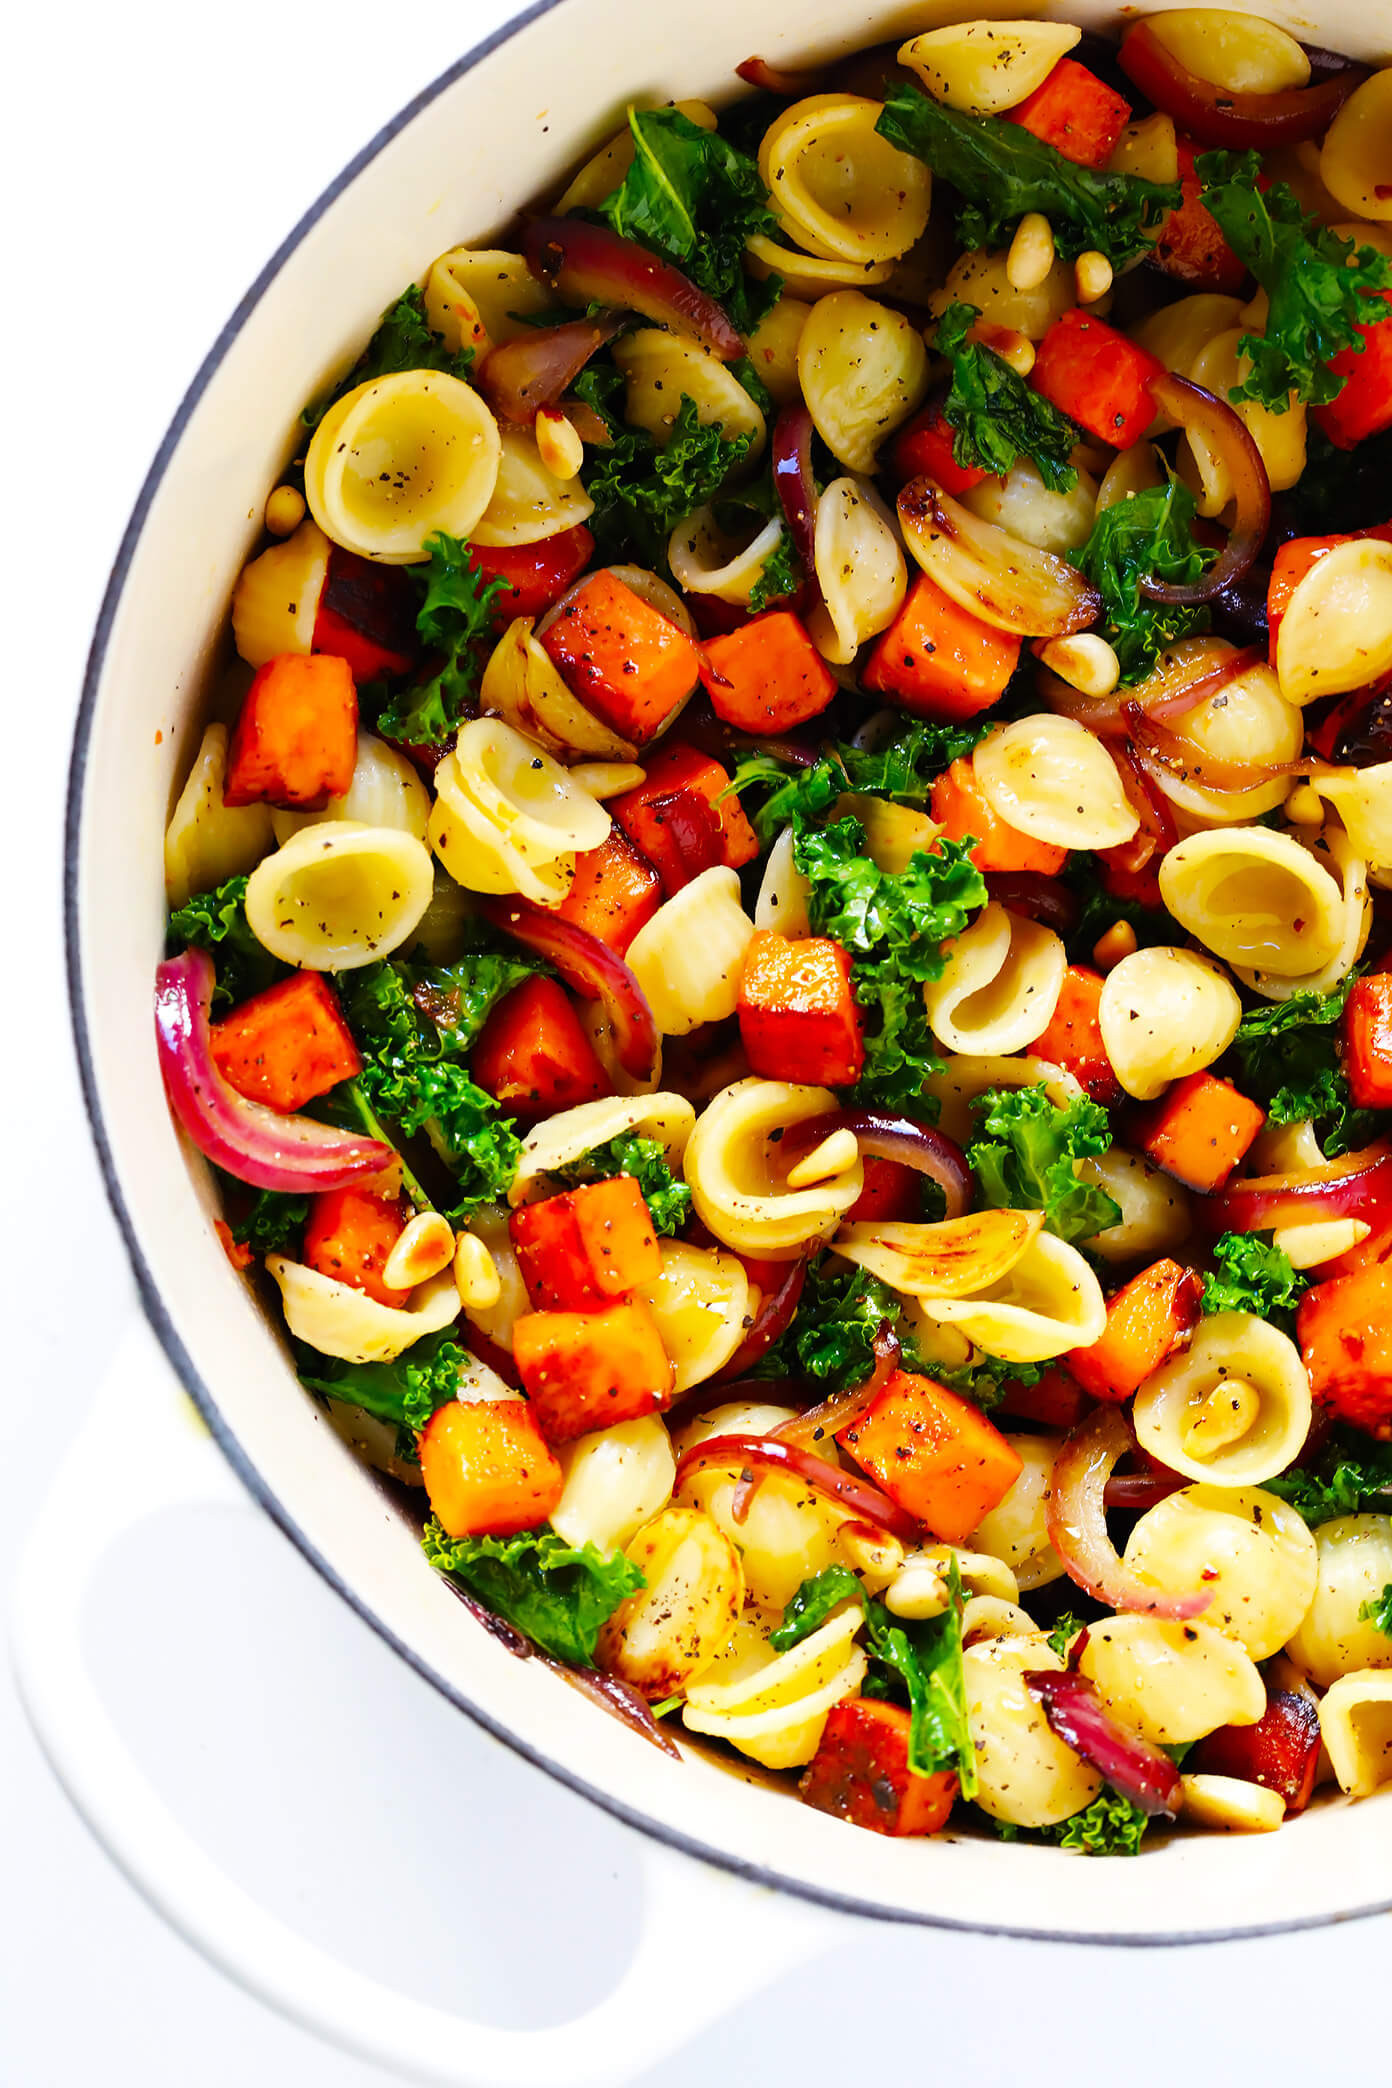 Quick Vegetarian Dinner Ideas
 20 Ve arian Dinner Recipes That Everyone Will LOVE